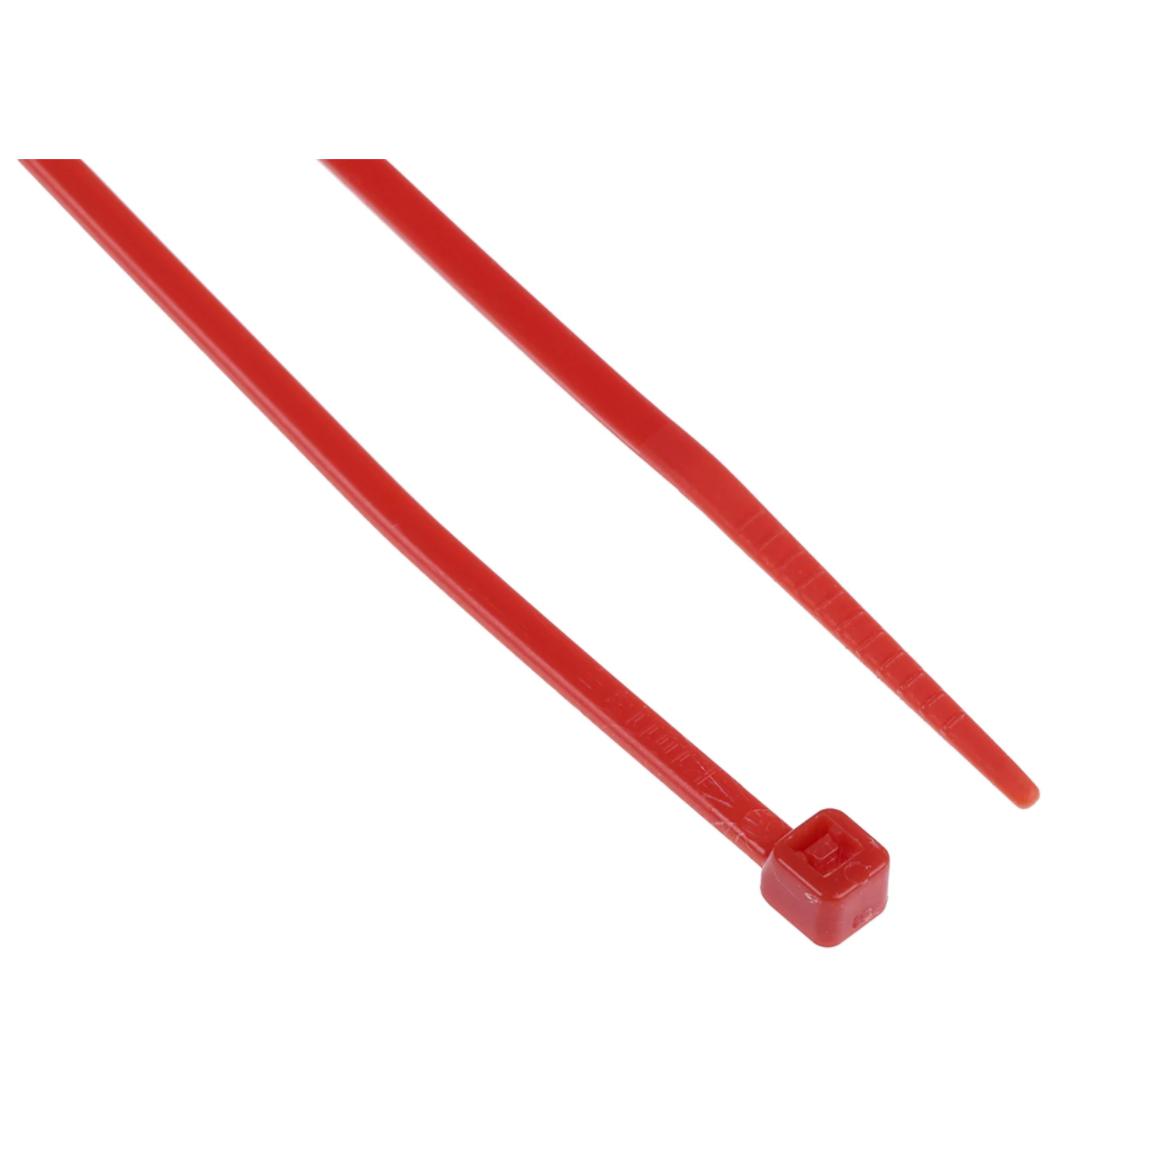 Cable Tie Premium Selfit SapiSelco-Wire & Cable Ties-SapiSelco-Red-ℓ200 x 𝑤4.5mm-𝑝/100-diyshop.co.za